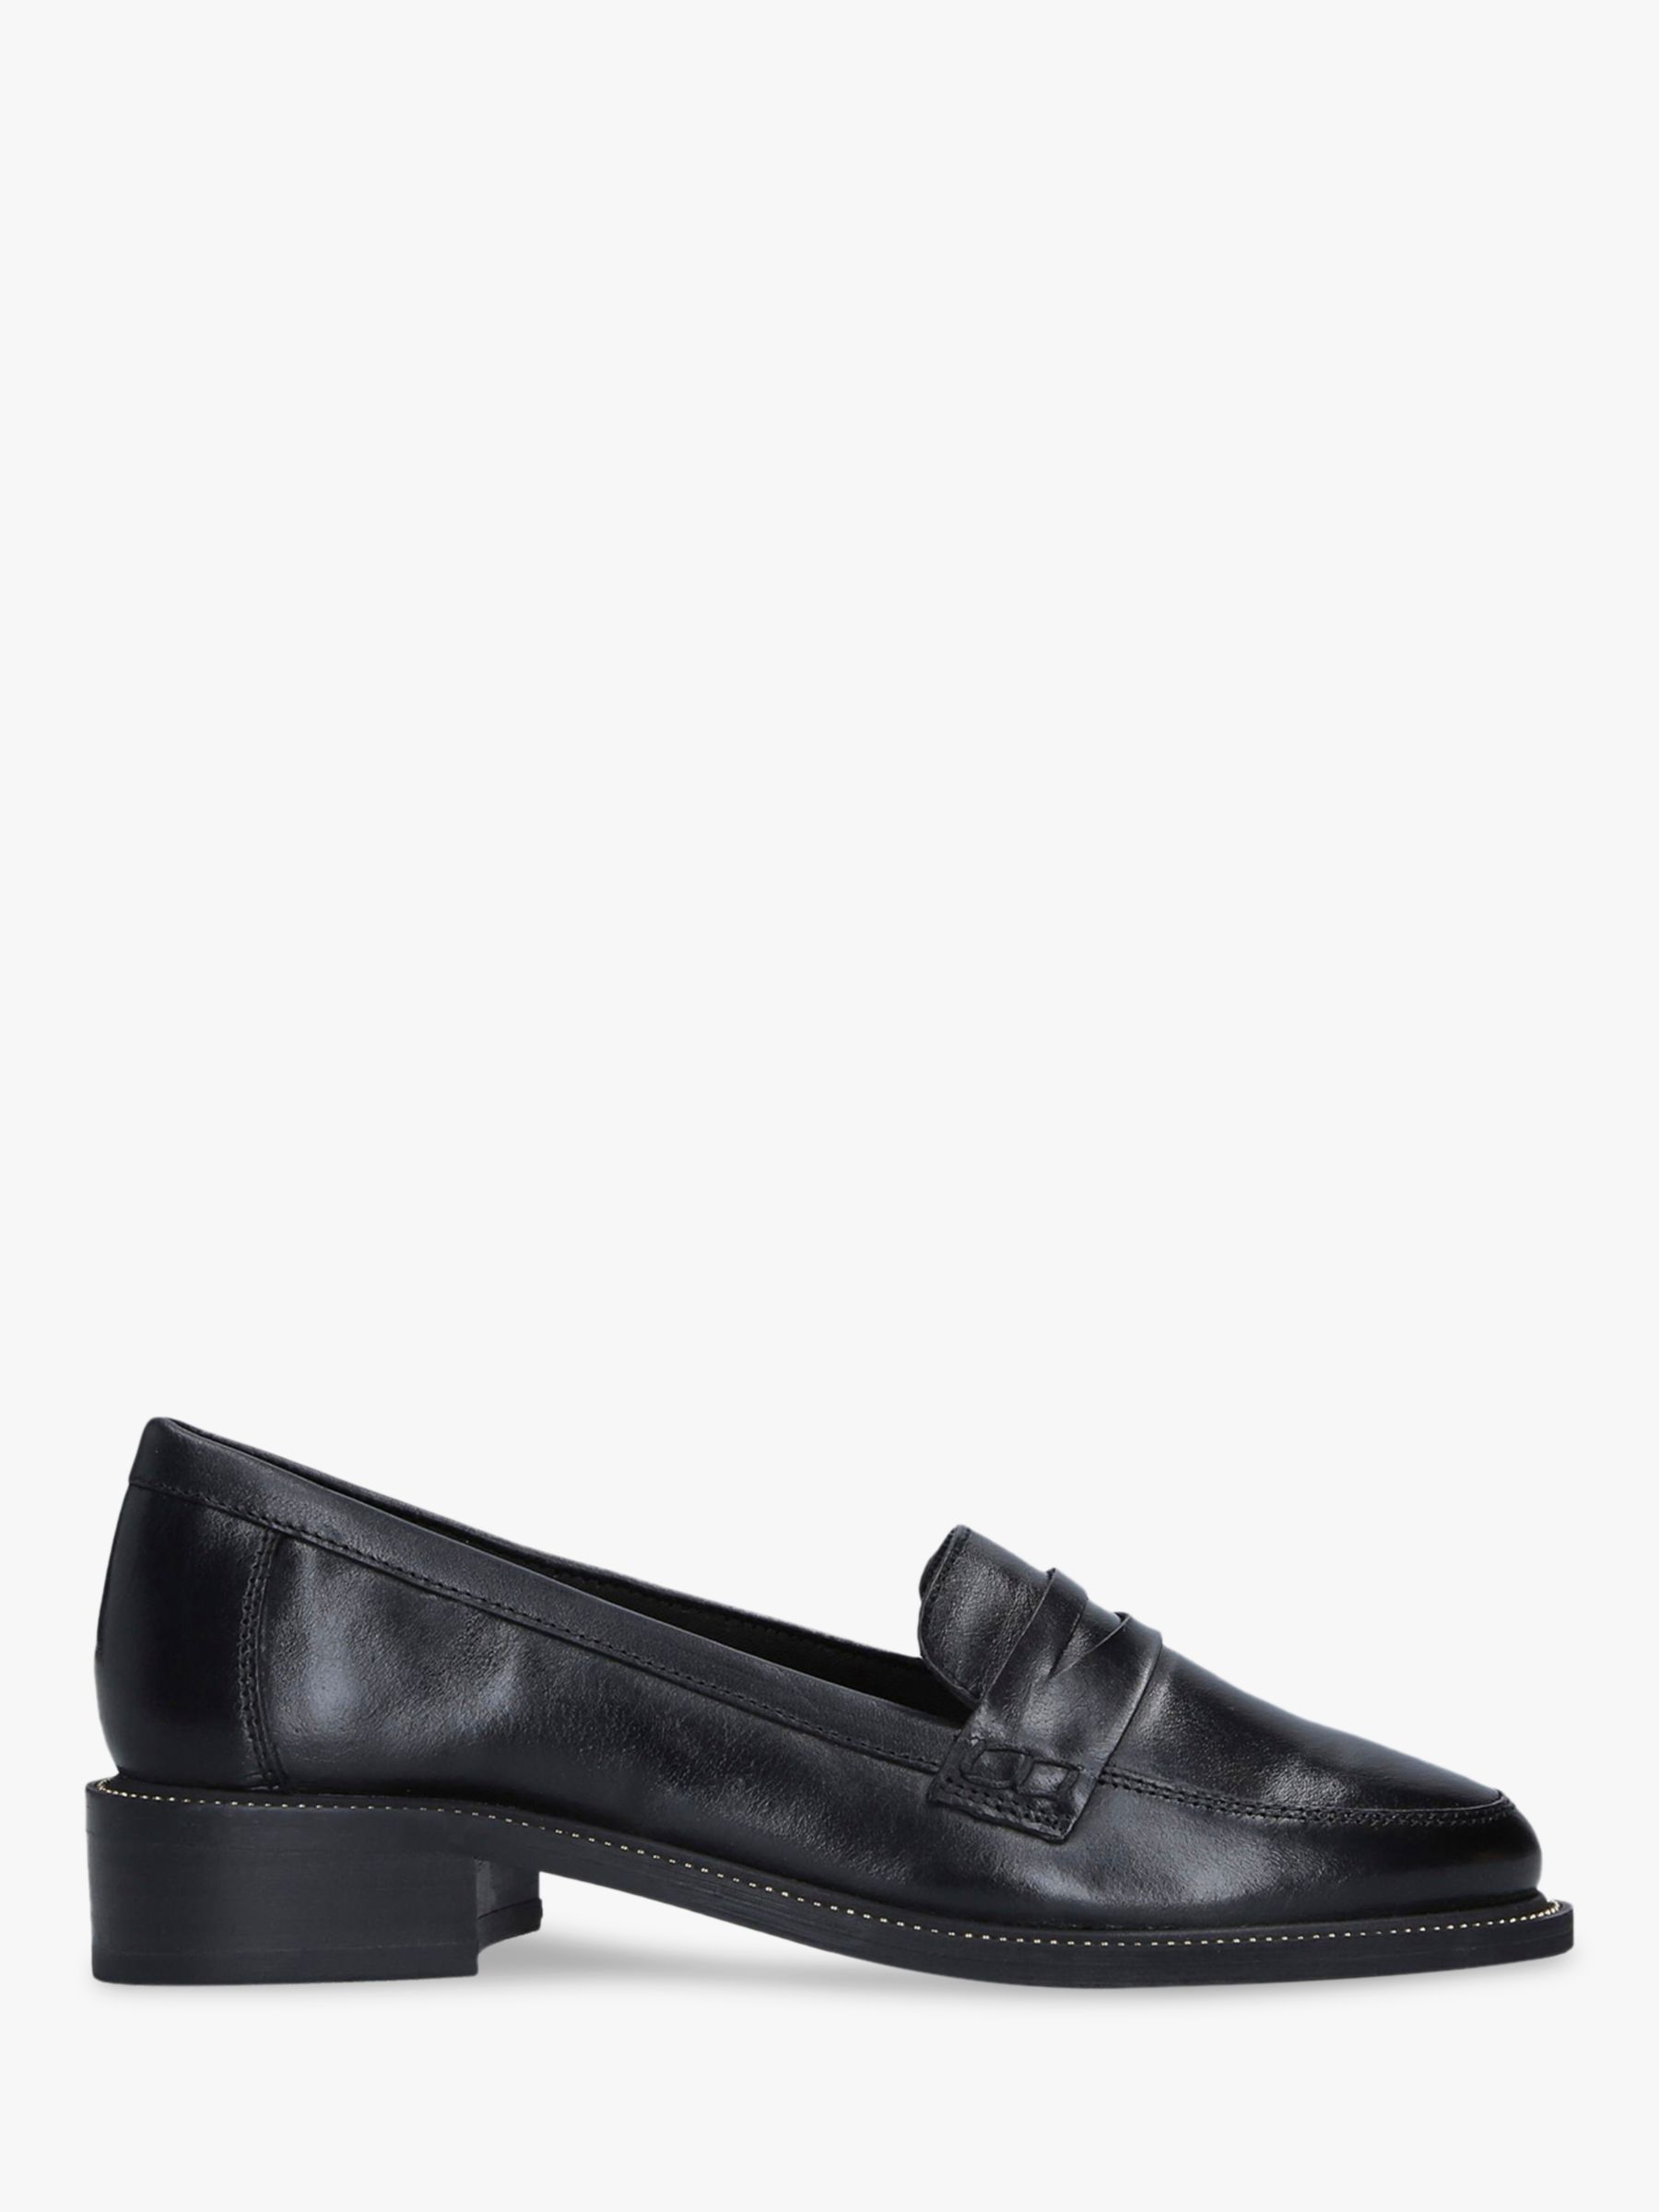 Carvela Maeve Stud Detail Leather Loafers, Black